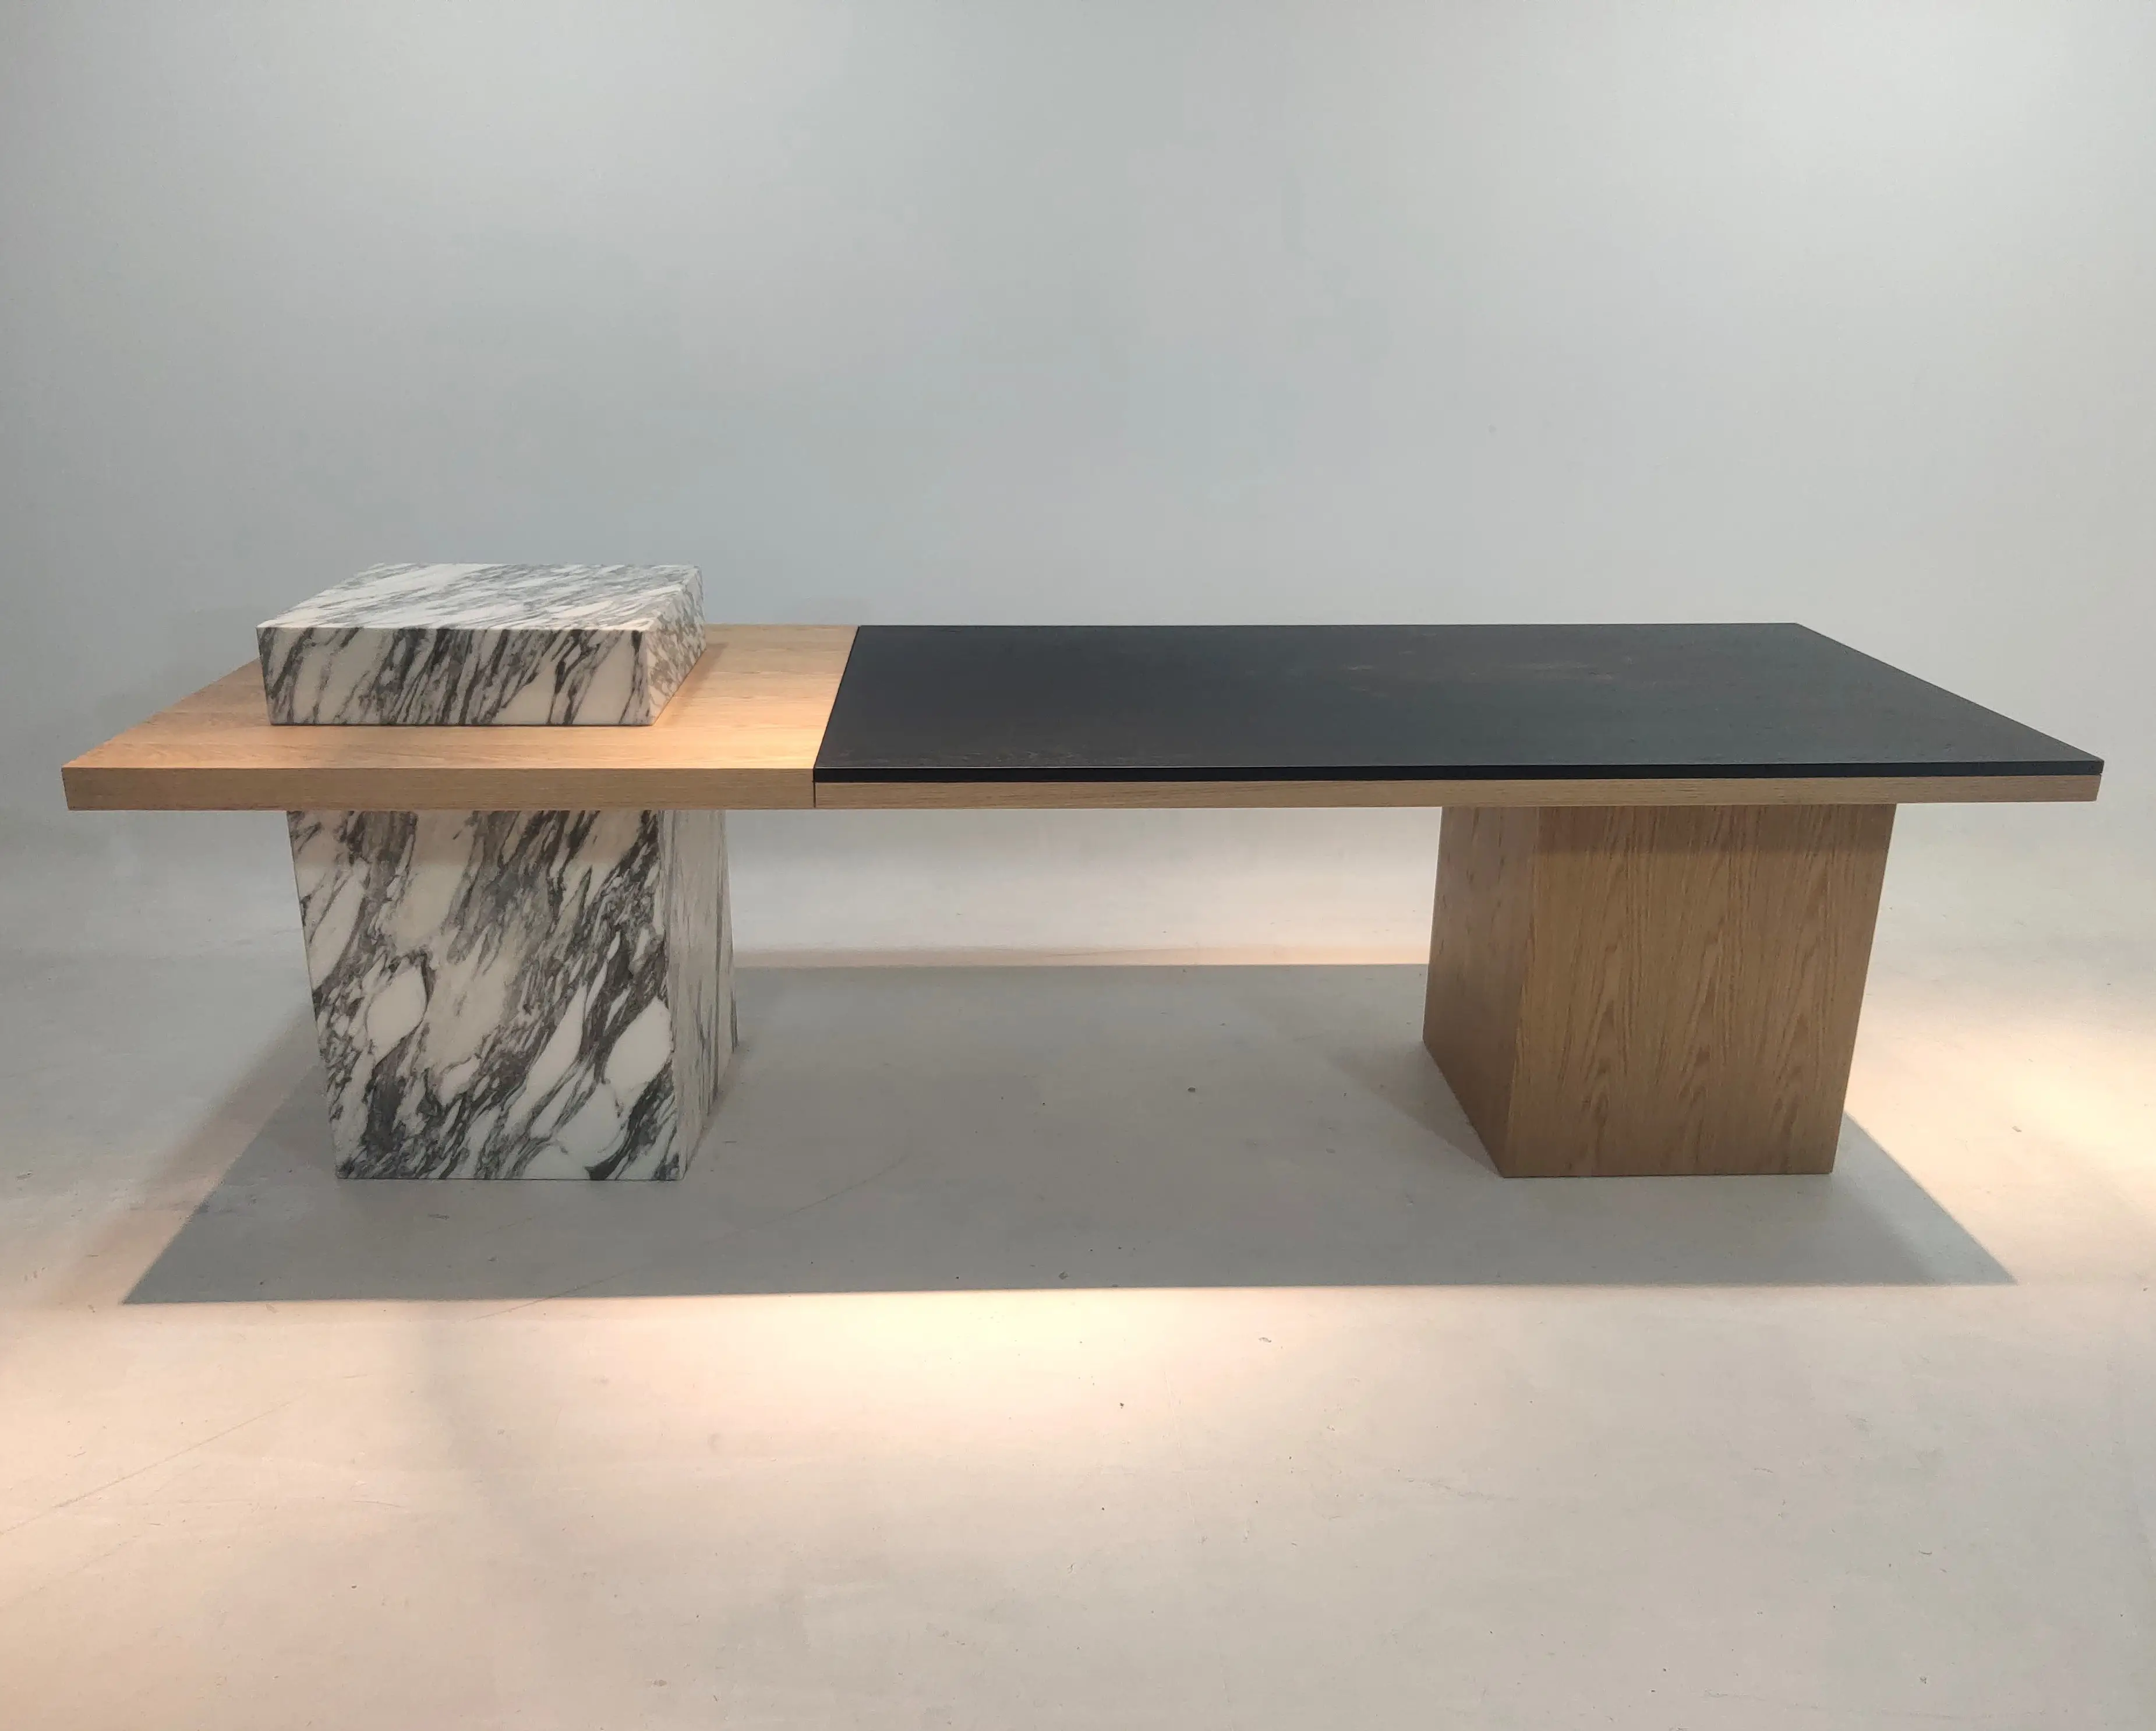 Nordic Kitchen Stone Table A Manger Complet Mesa De Comedor De Marmol Bois Italian Designer 10 Seater Large Wooden Dining Table